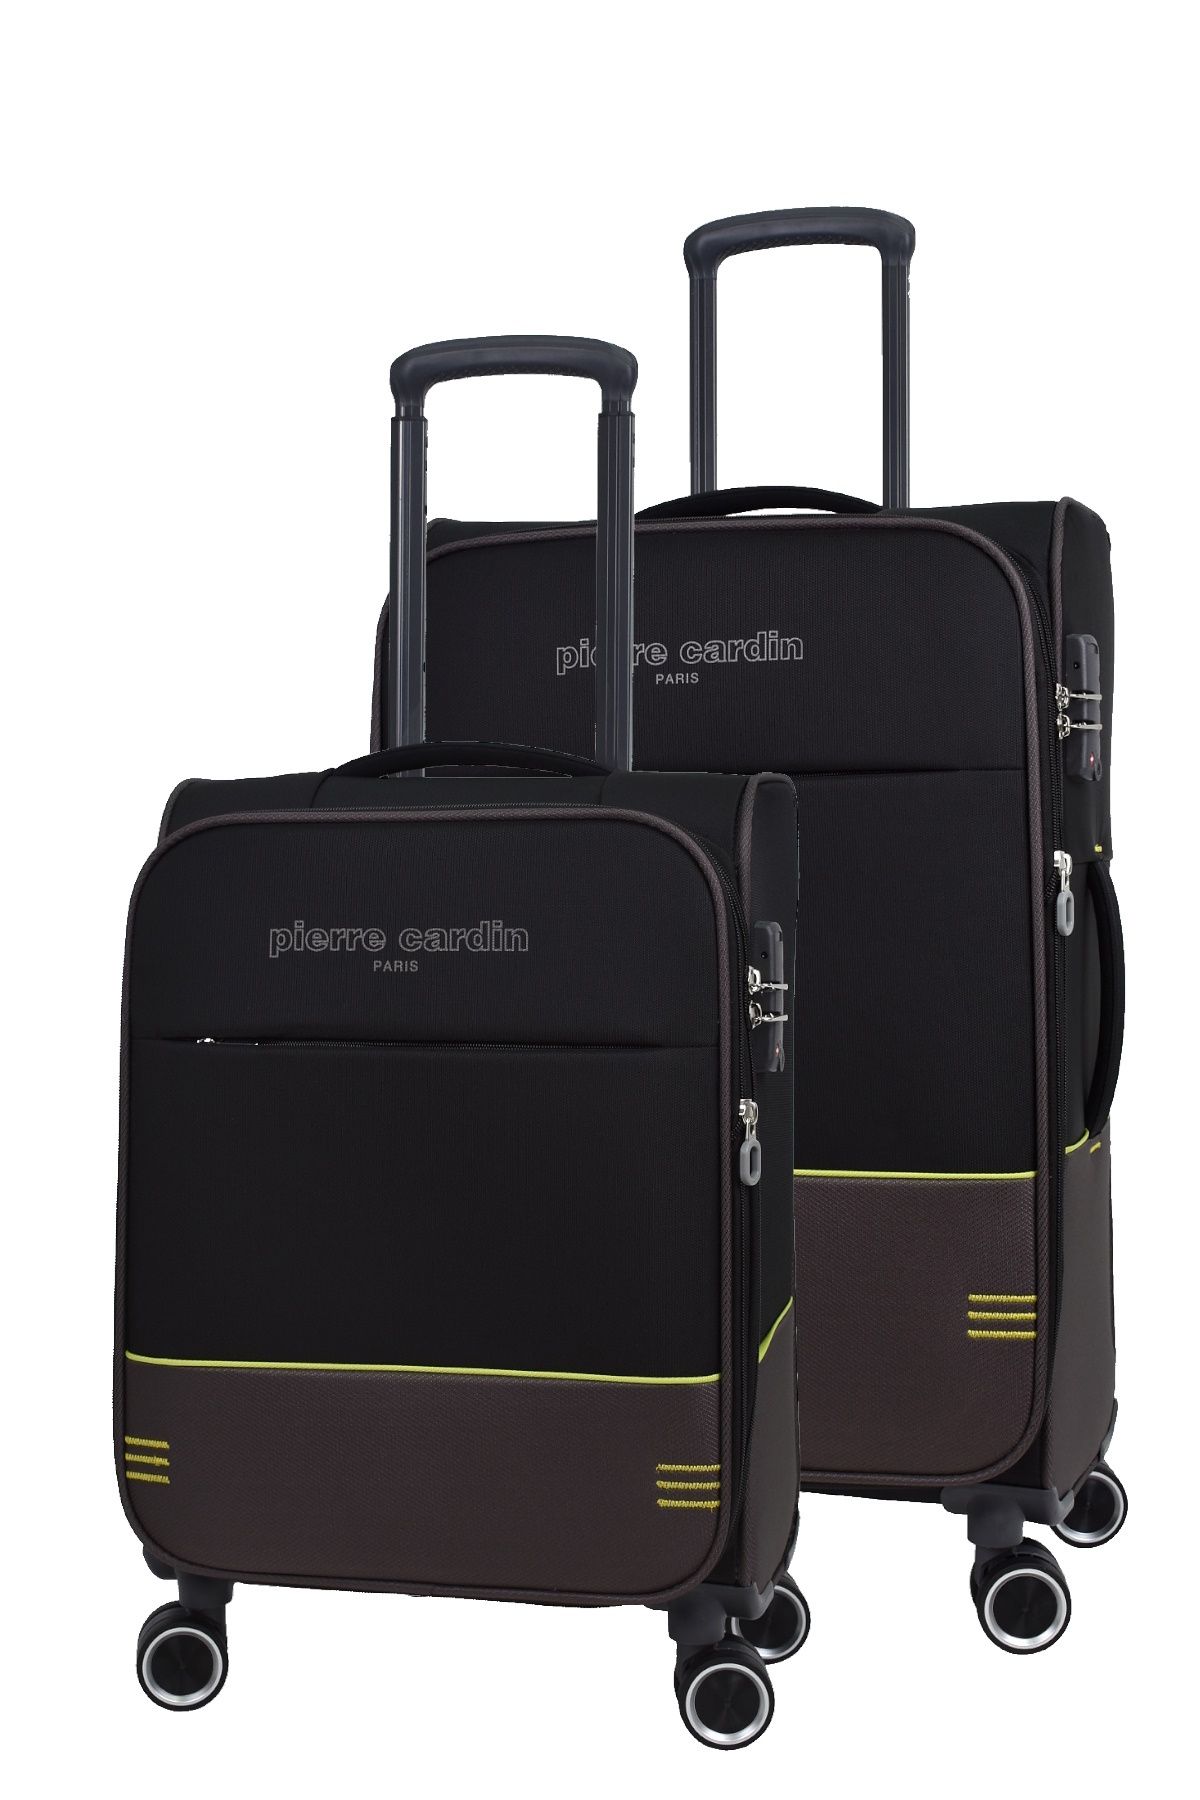 Pierre Cardin ست چمدان 2 تکه پارچه لوکس بسیار سبک و - اندازه کابین PC8200 PC-8200-04